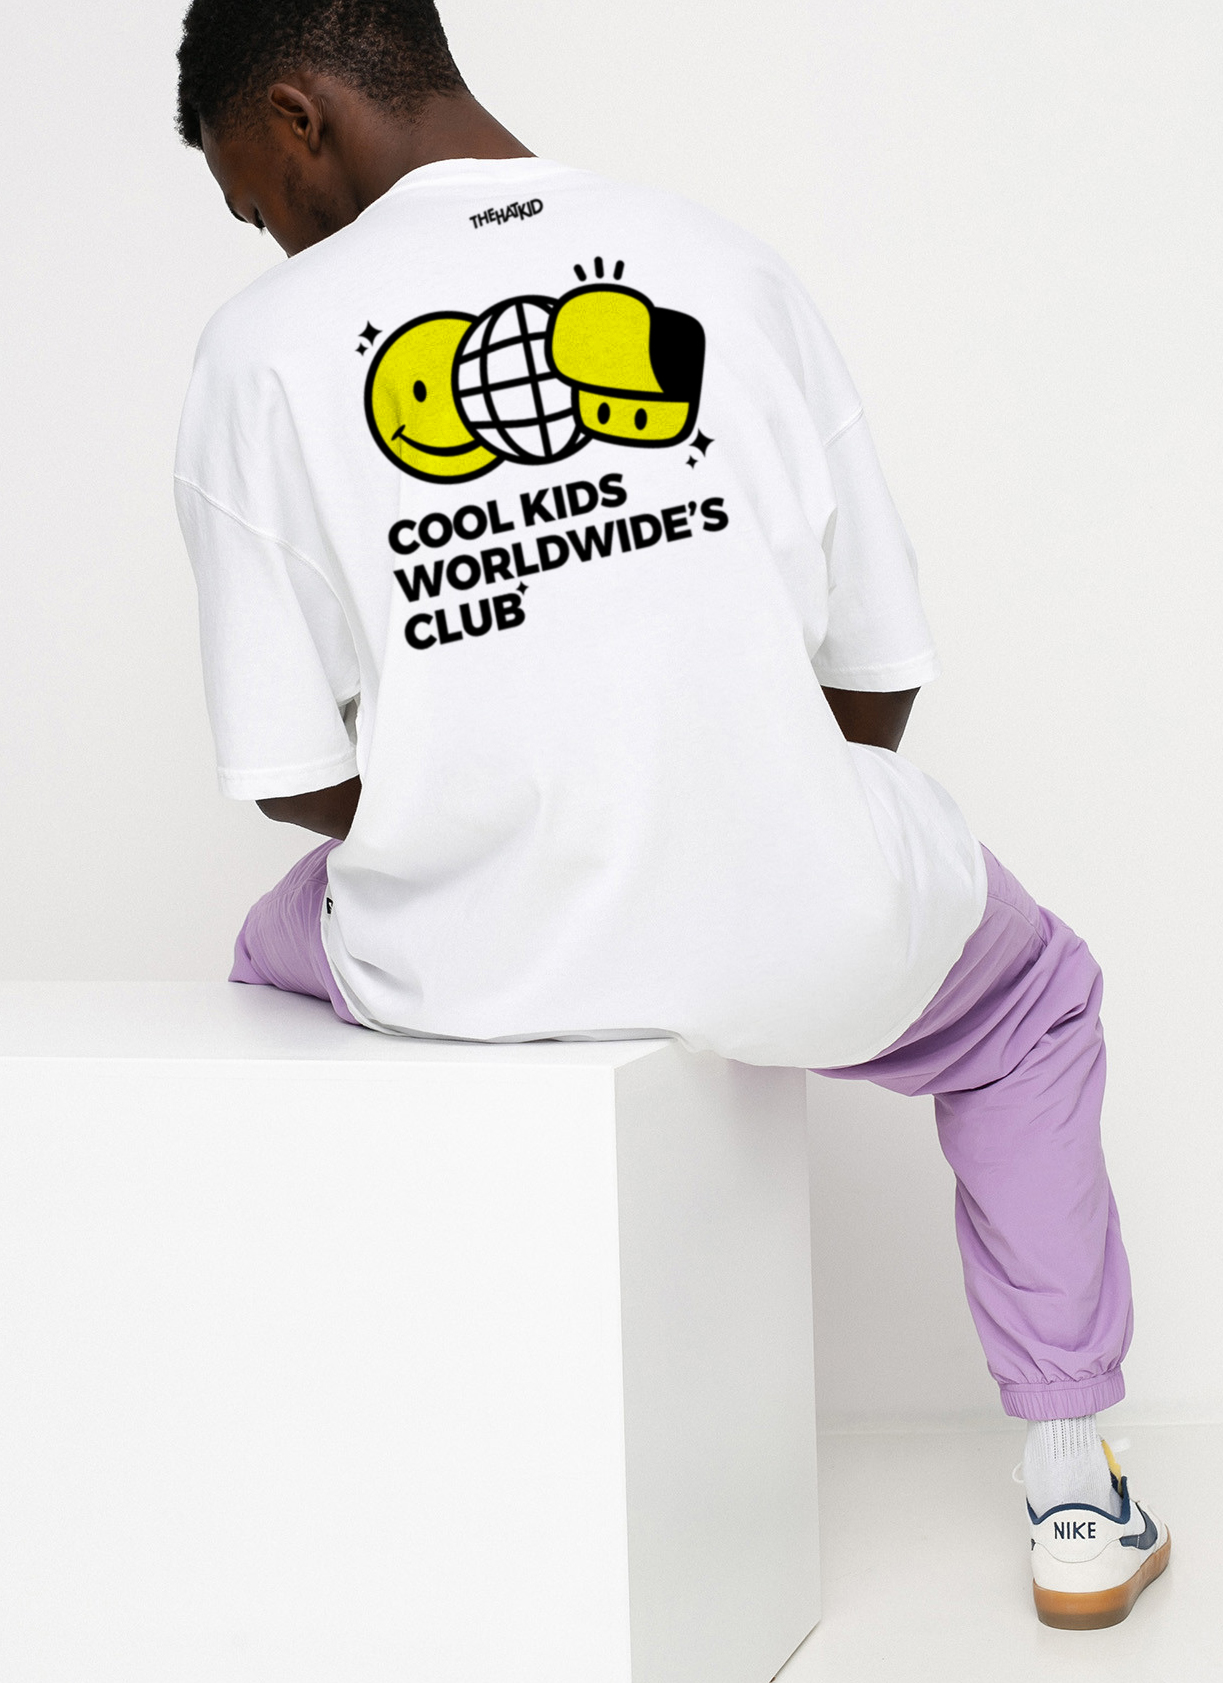 COOL KIDS WORLDWIDE\'S CLUB” T-Shirt – THE HATKID